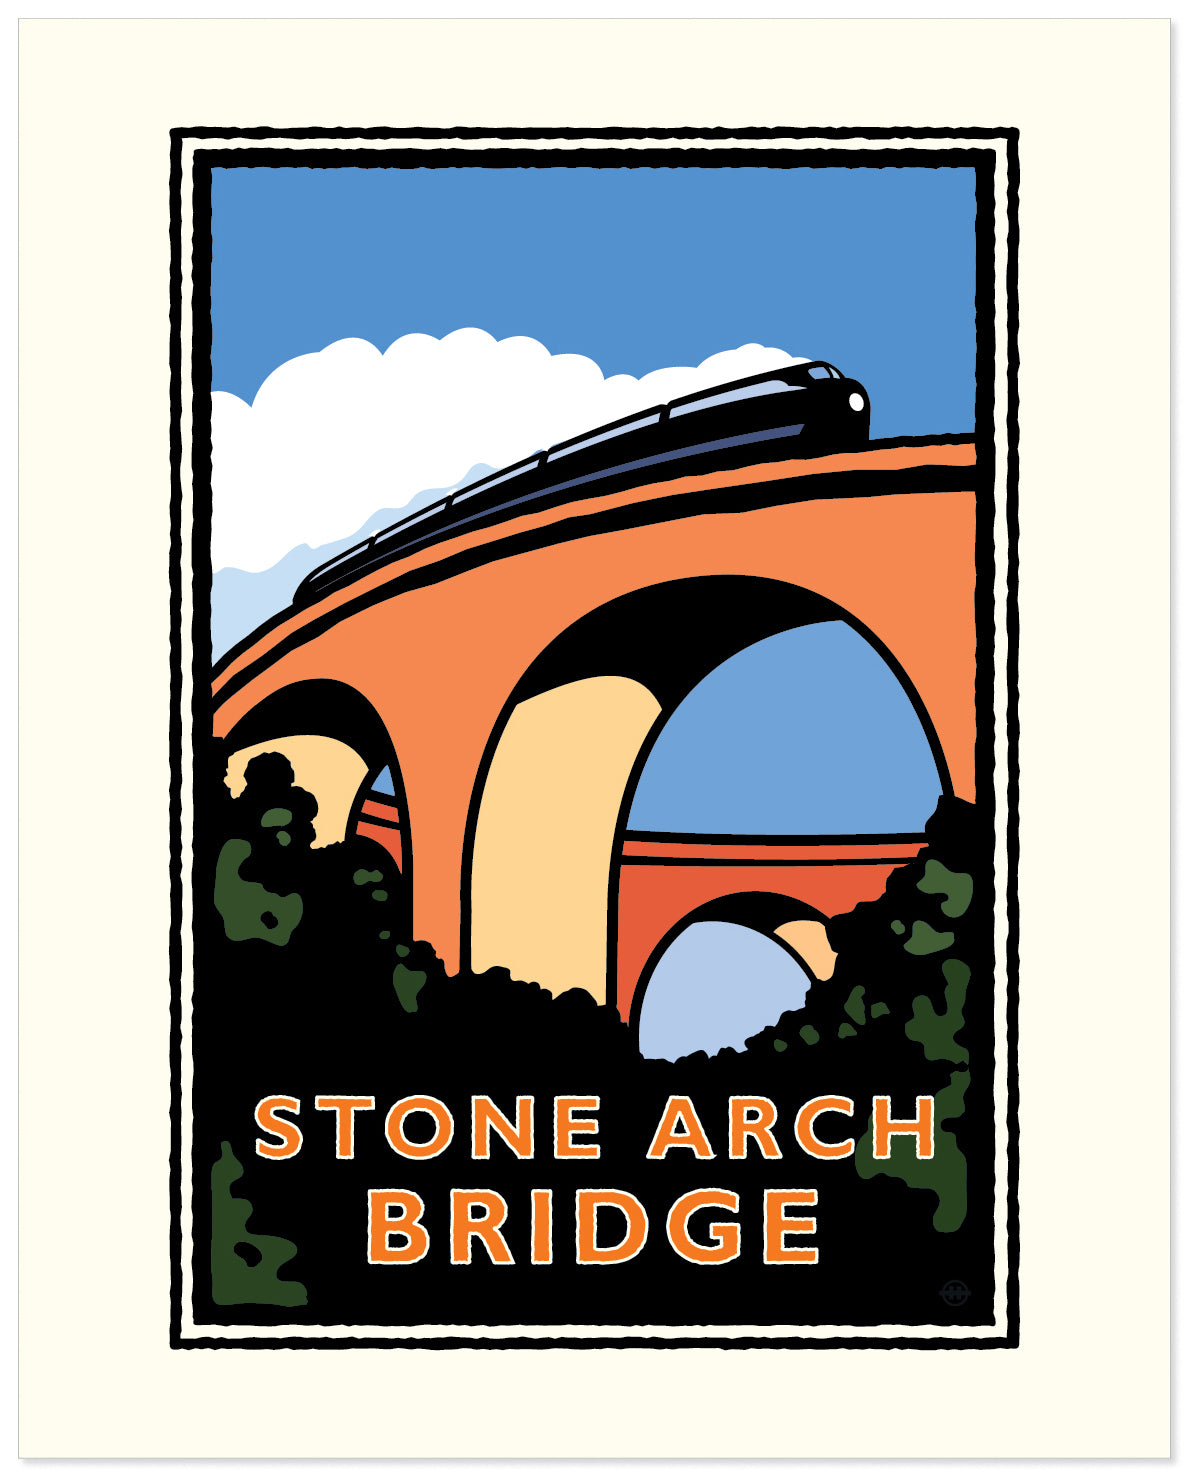 Syon - proposal for a bridge - Architectural drawing, public domain image -  PICRYL - Public Domain Media Search Engine Public Domain Search